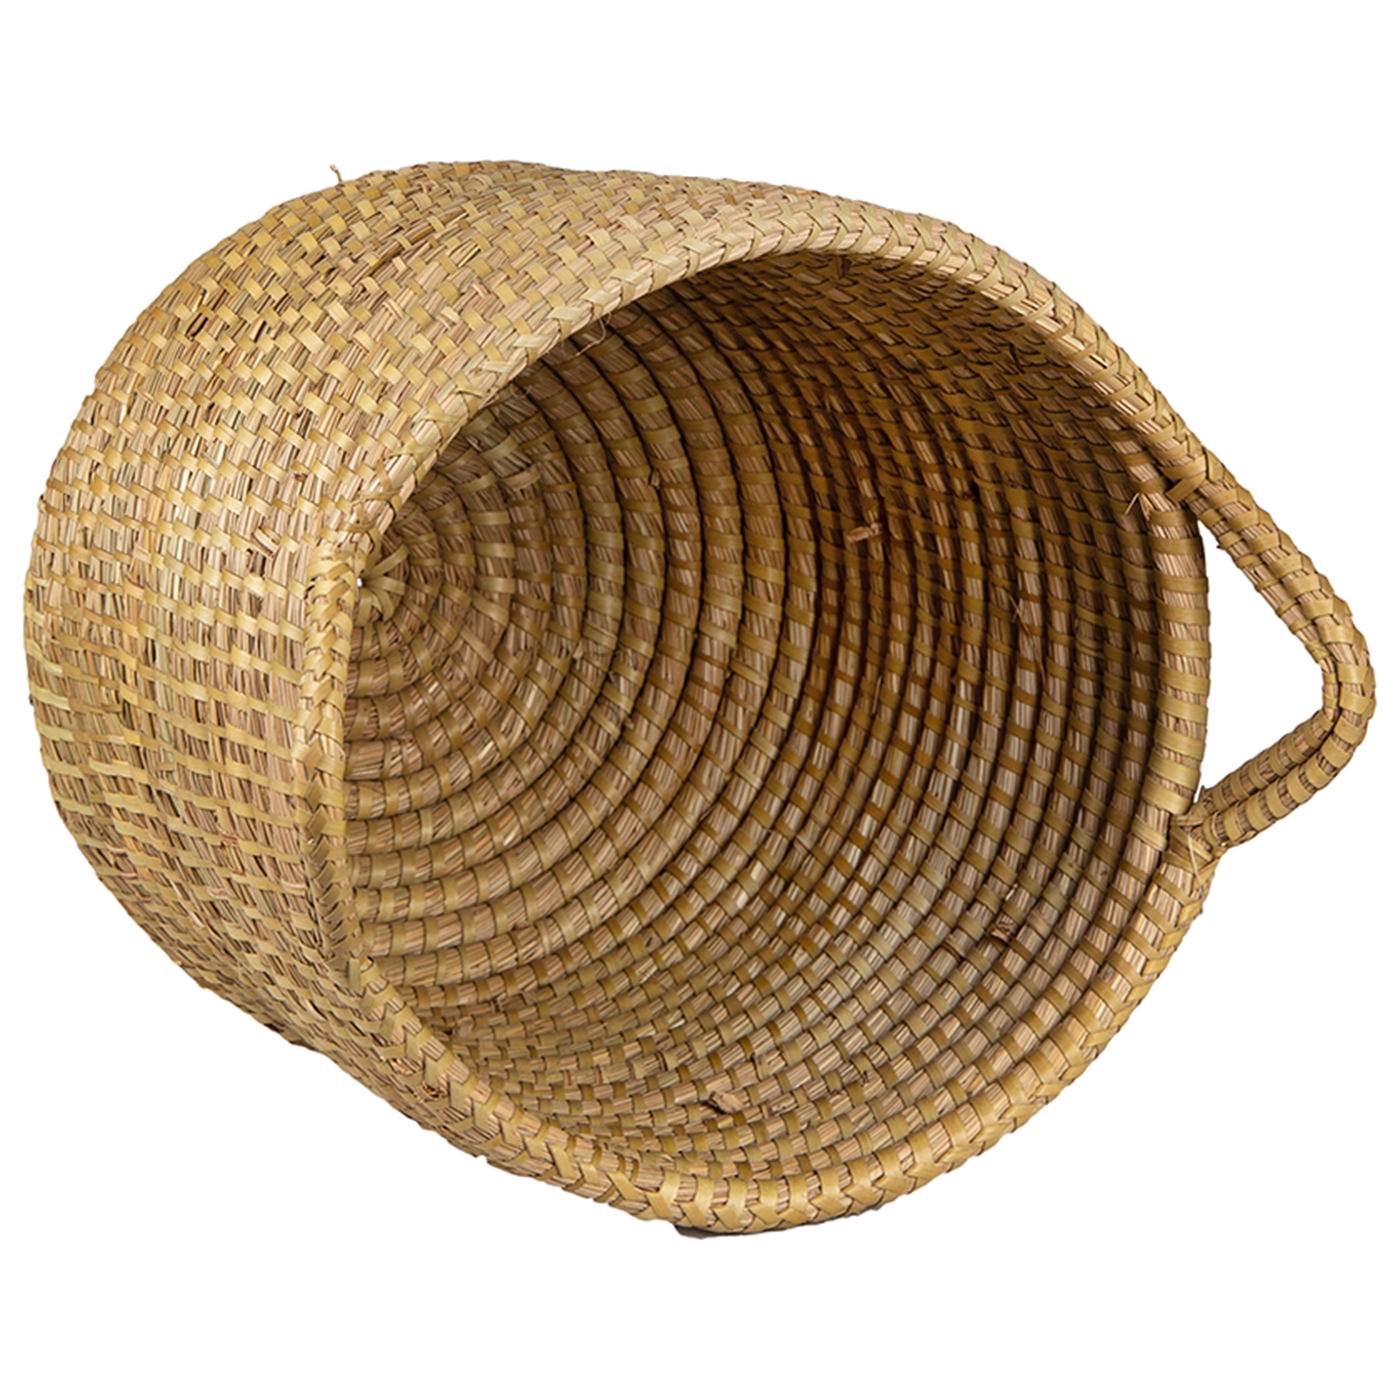 5Q 1099 066 3 – Sea Grass Fruit Basket Cylinder White S (3)